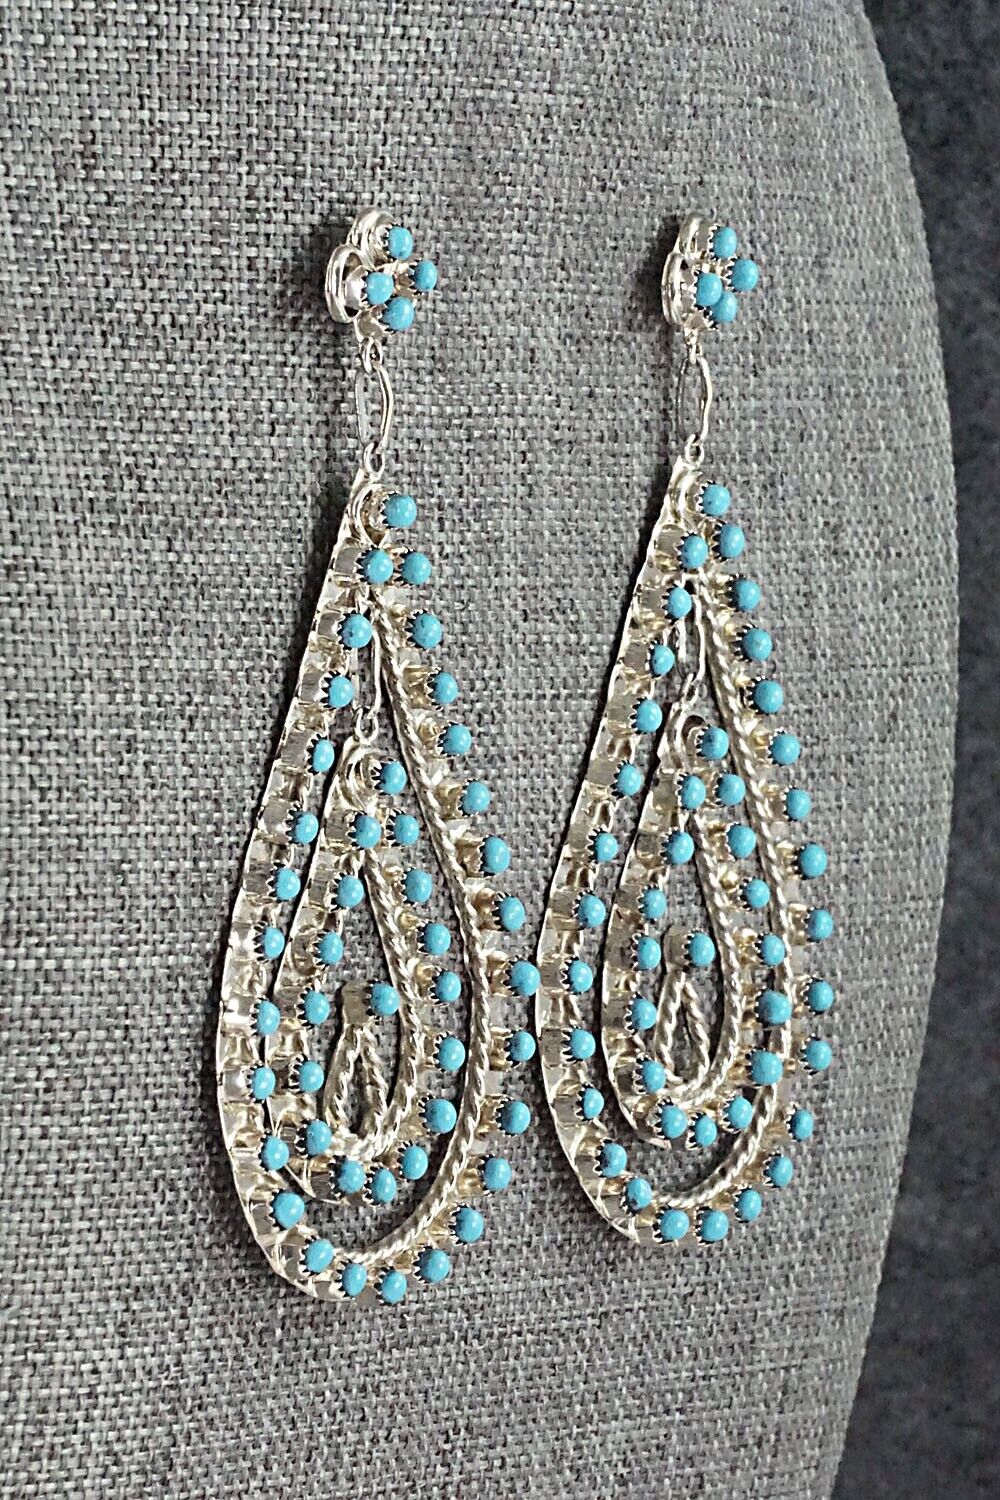 Turquoise & Sterling Silver Earrings - Wayne Johnson